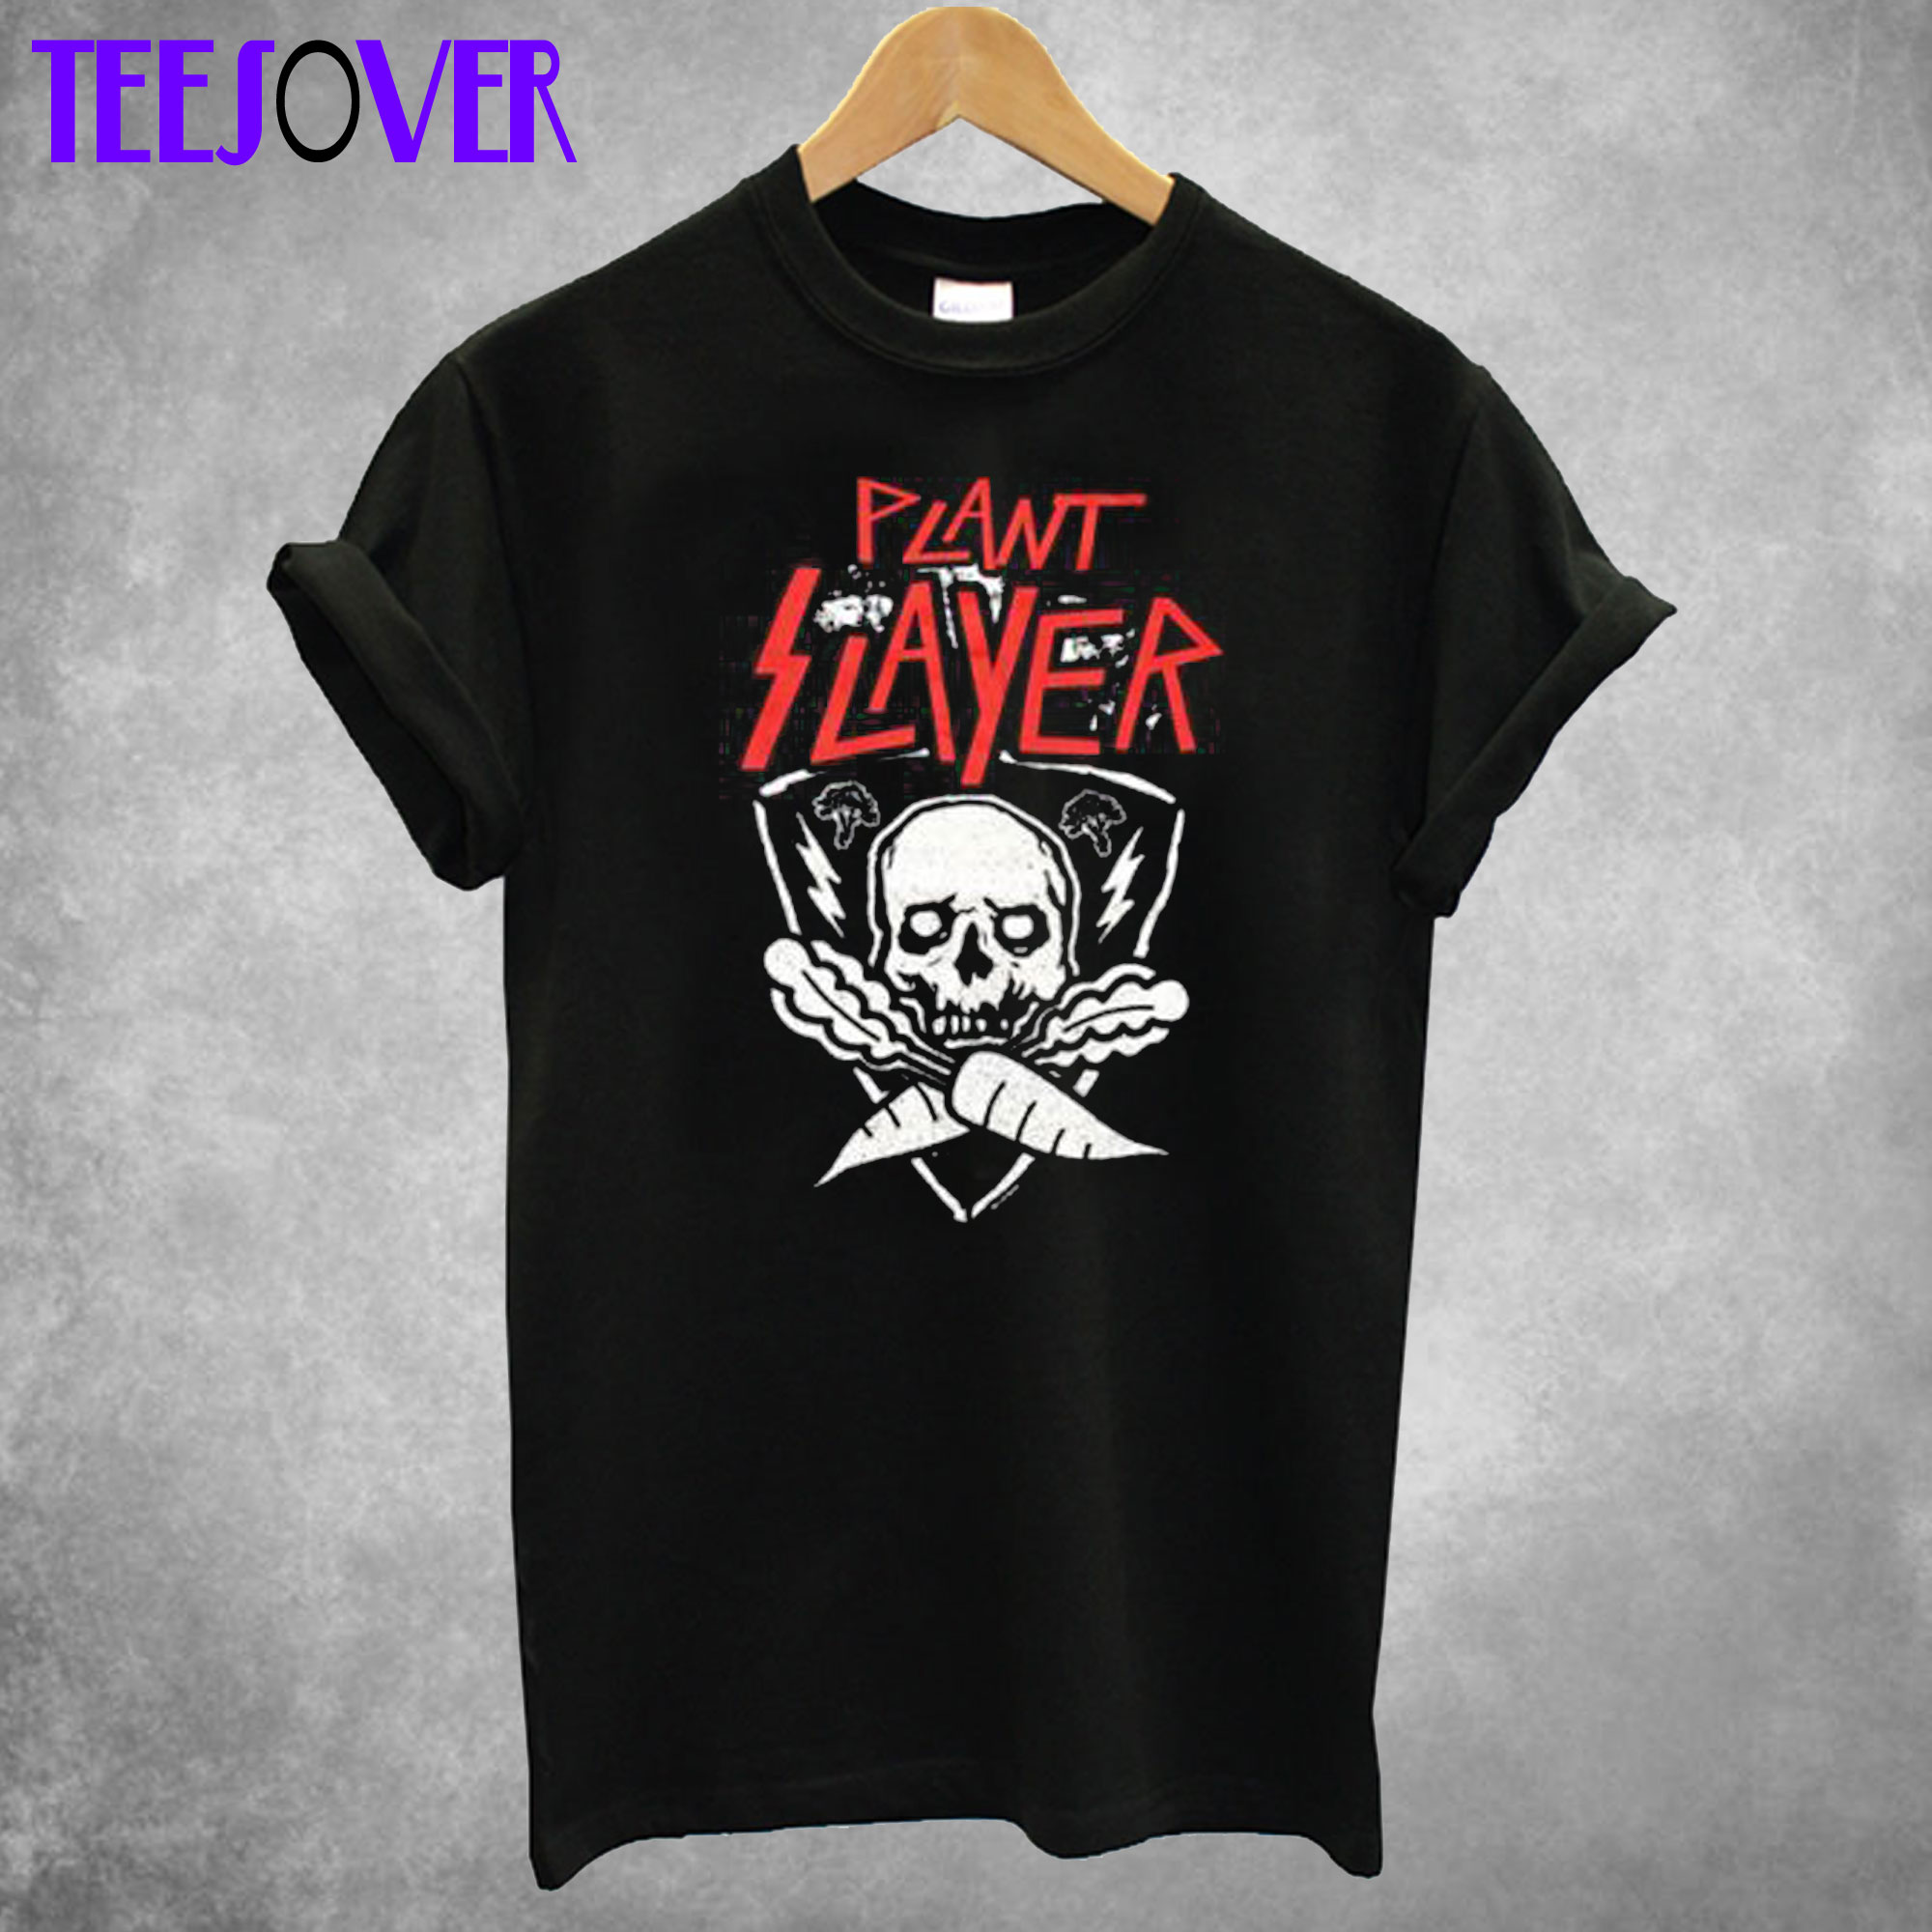 Plant Slayer T-shirt